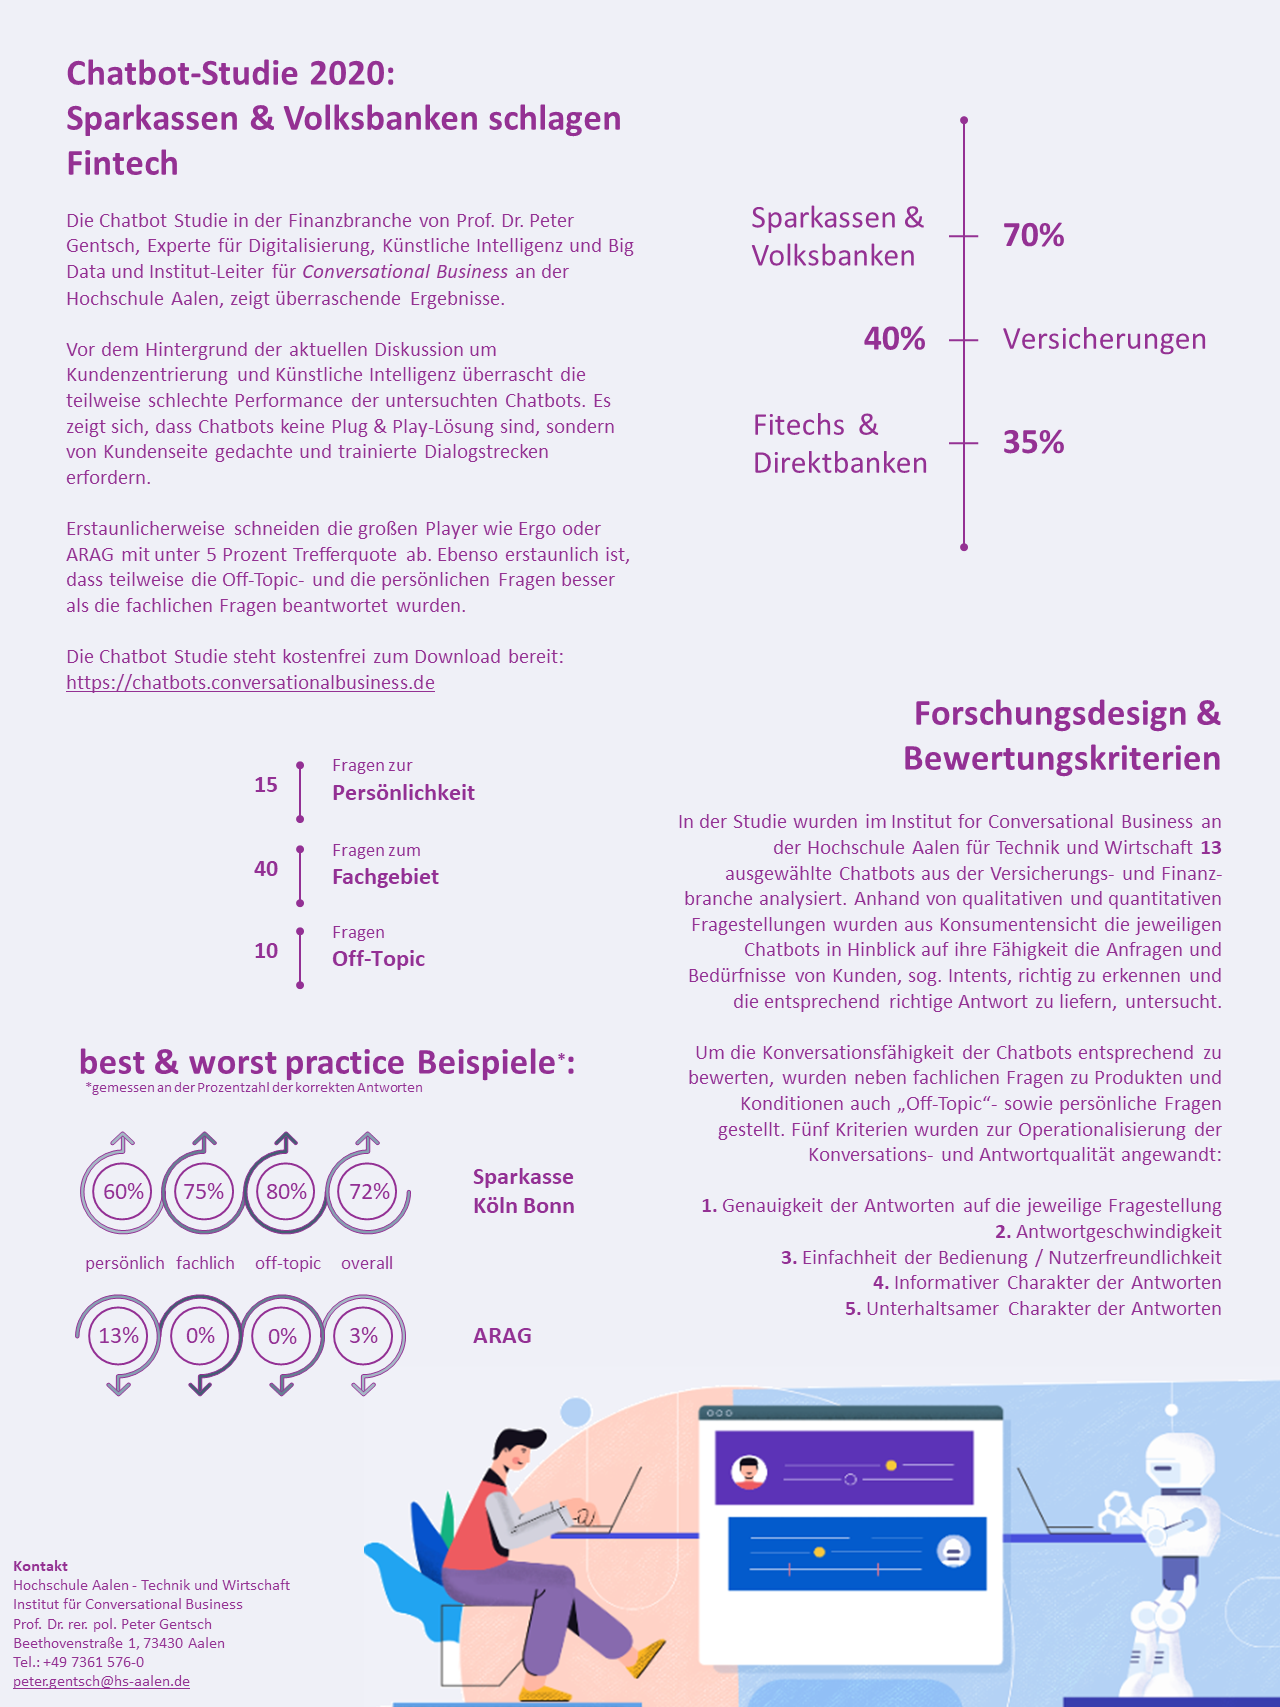 Chatbot Studie Infografik